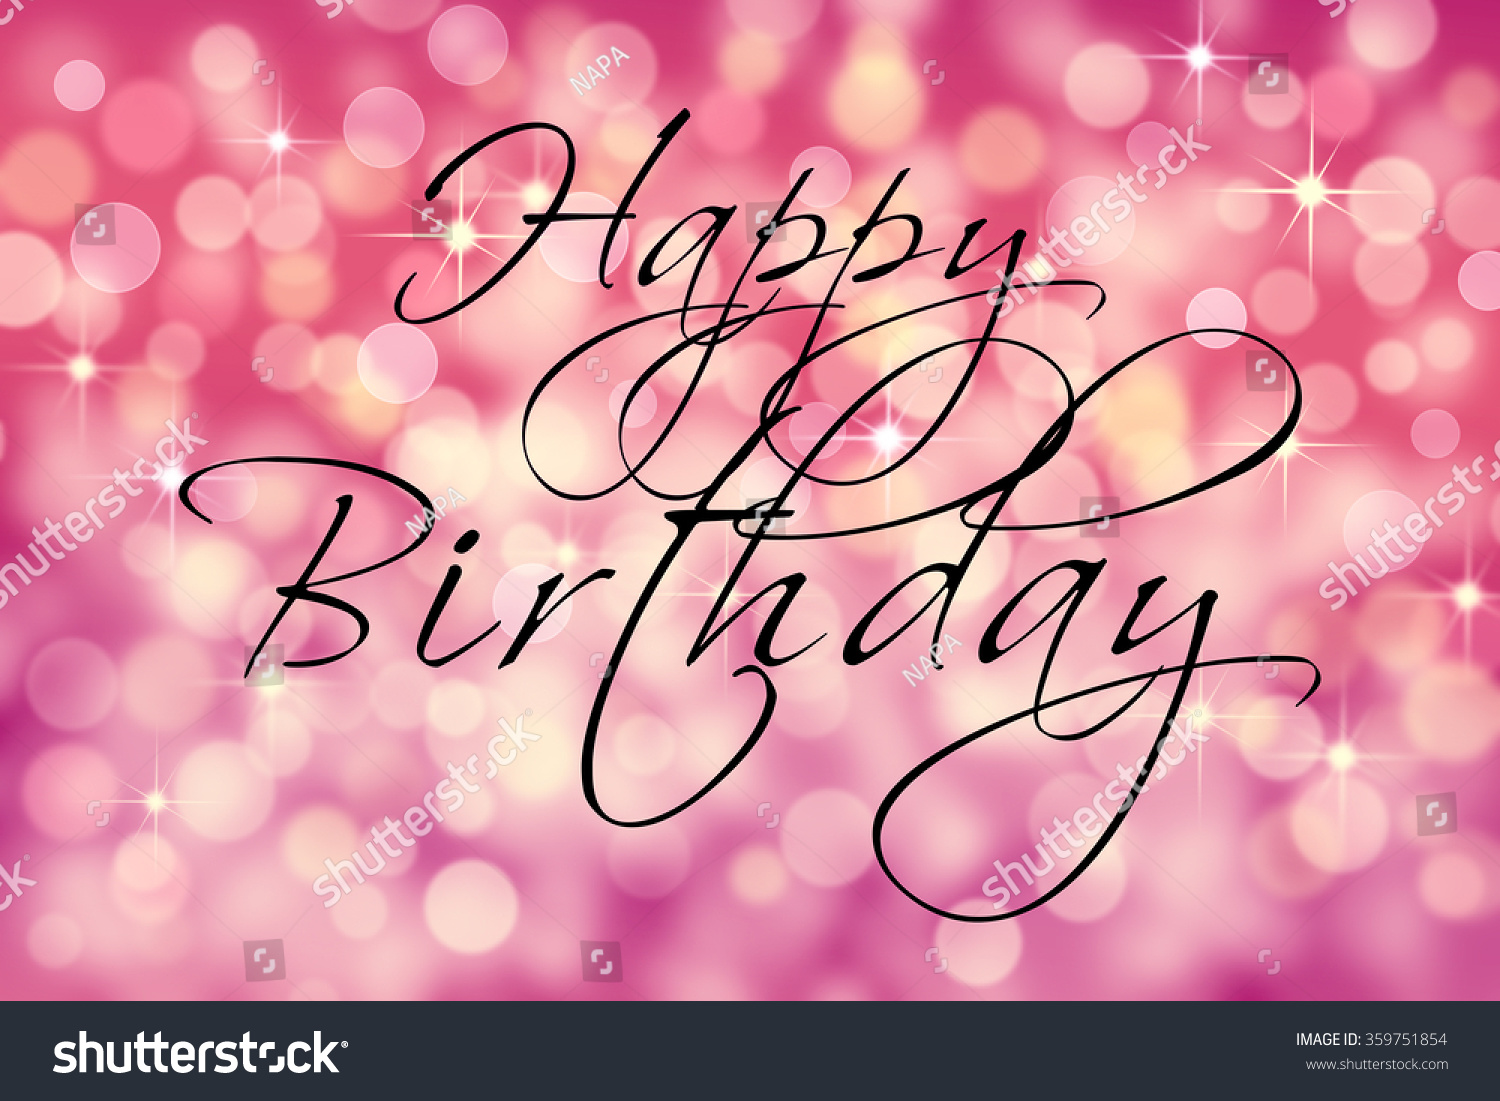 1,353 Birthday ecards Images, Stock Photos & Vectors | Shutterstock